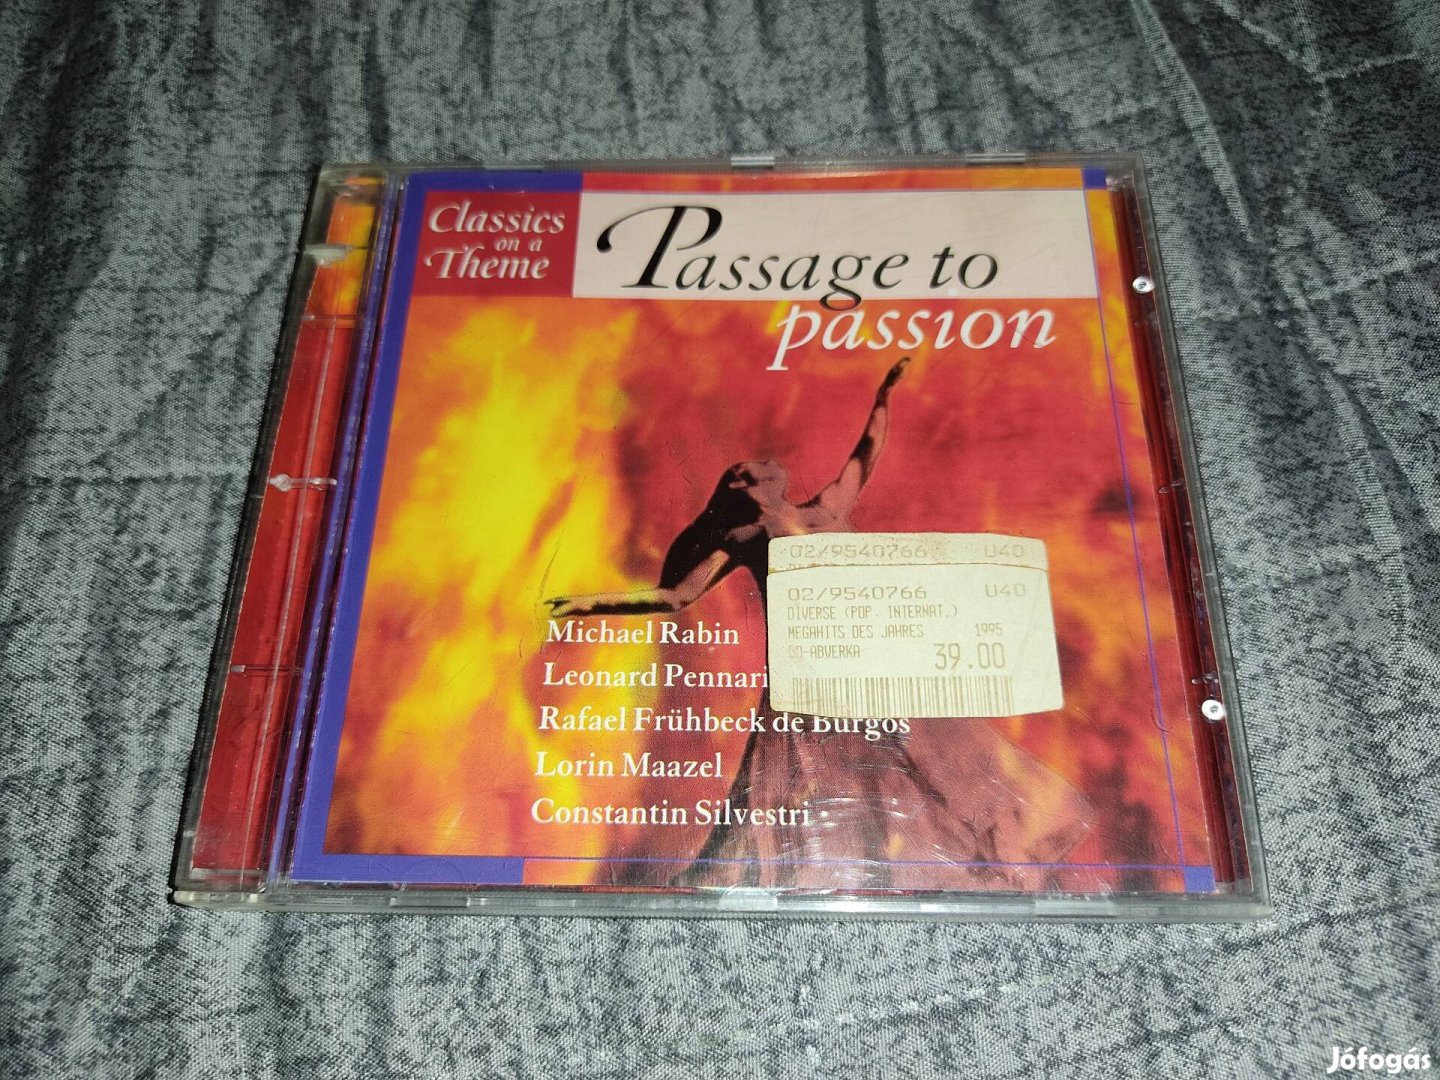 Classics On A Theme Passage To Passion CD(Ravel,Liszt,Dvorzak)  